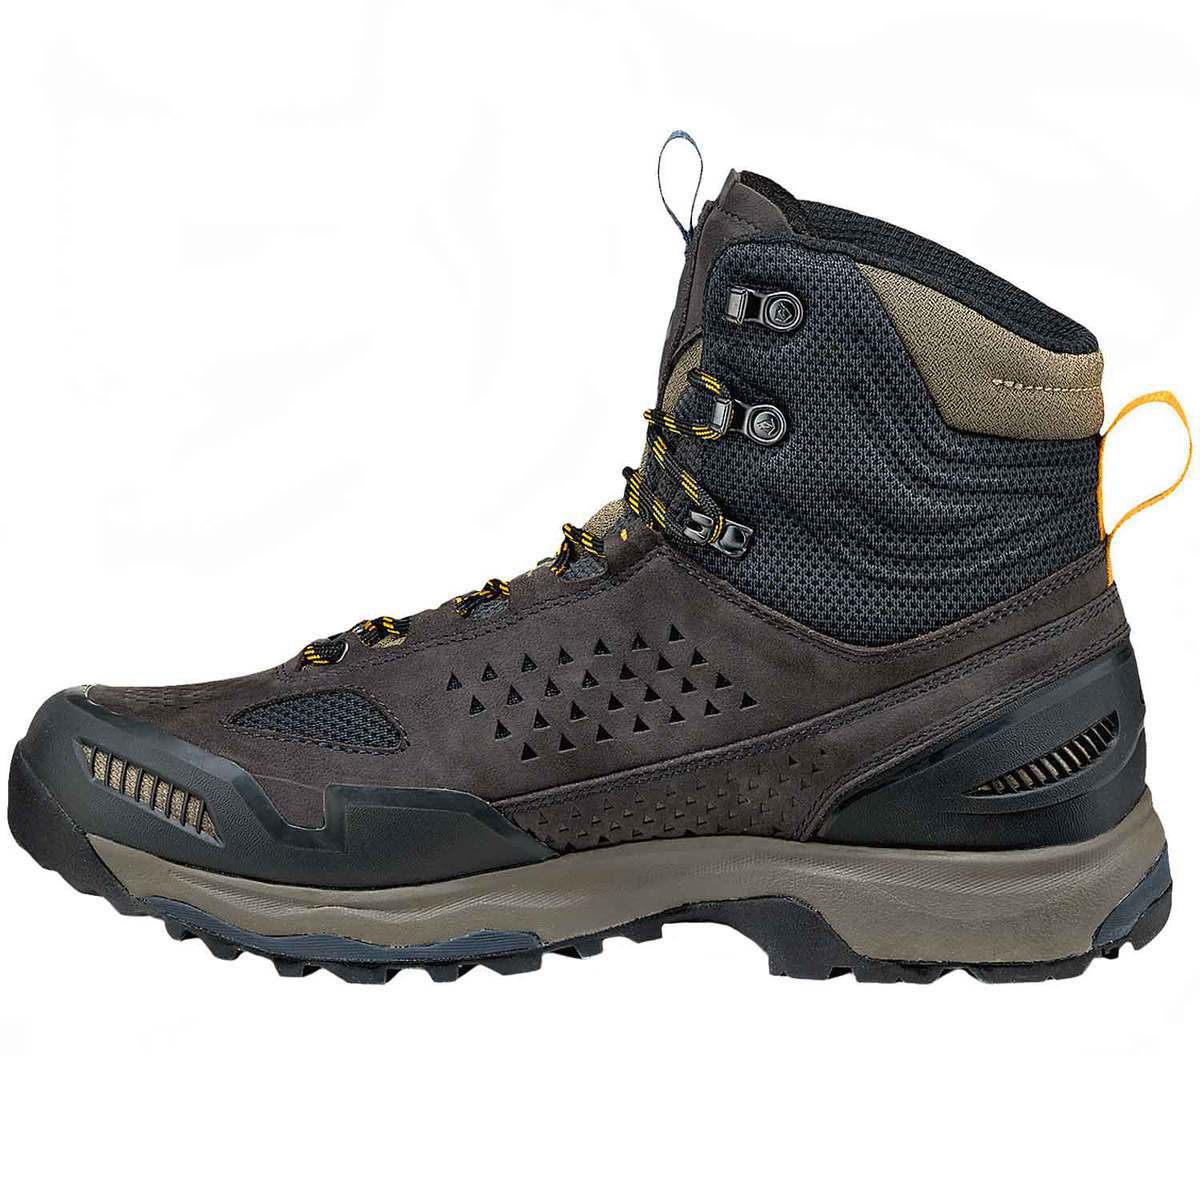 Vasque Men's Breeze All Terrain Waterproof Mid Hiking Boots - Ebony ...